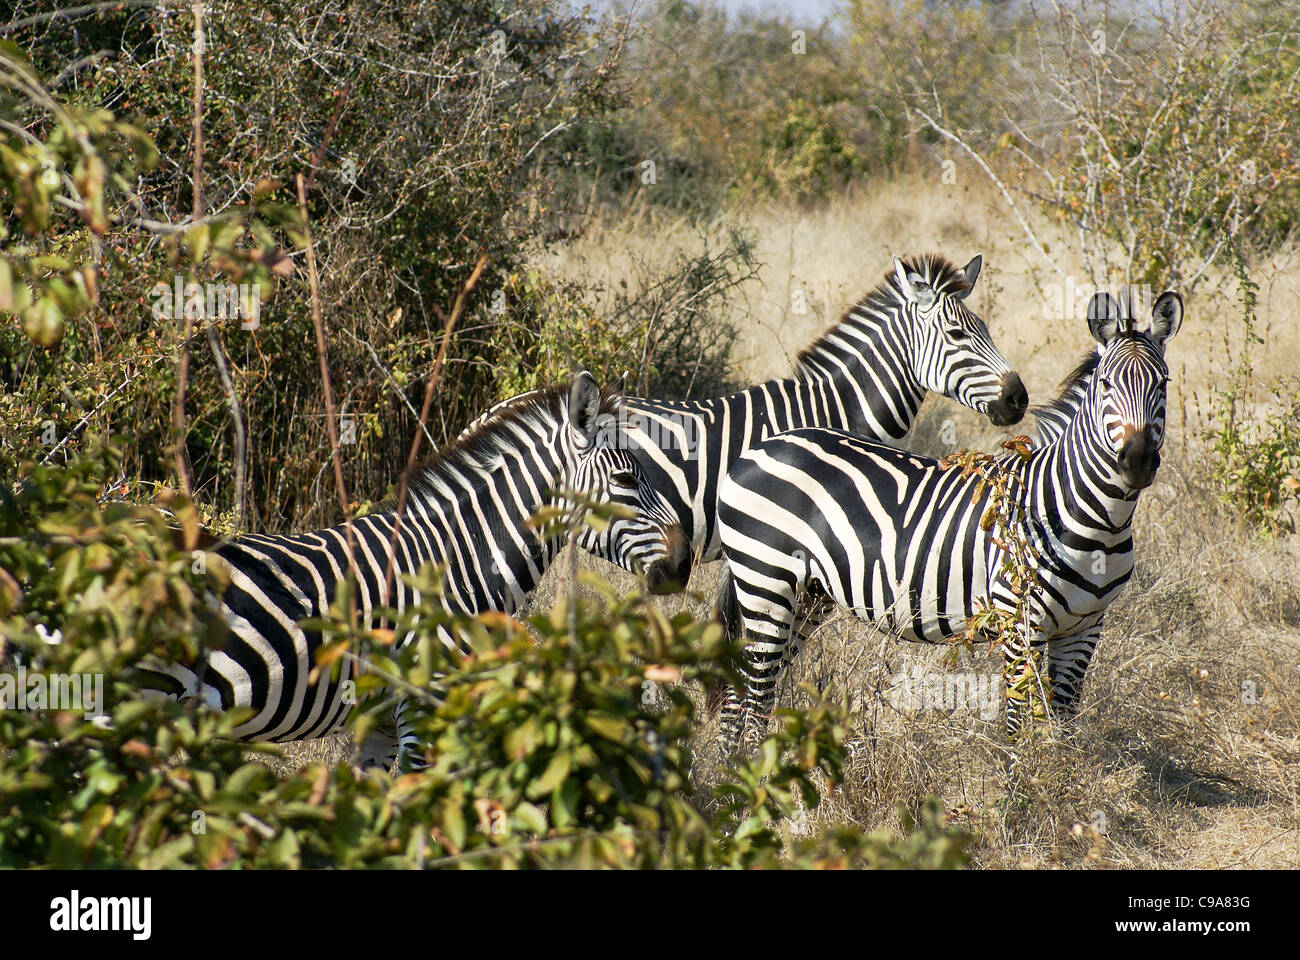 Tanzania wildlife safari A Herd of Zebras Stock Photo